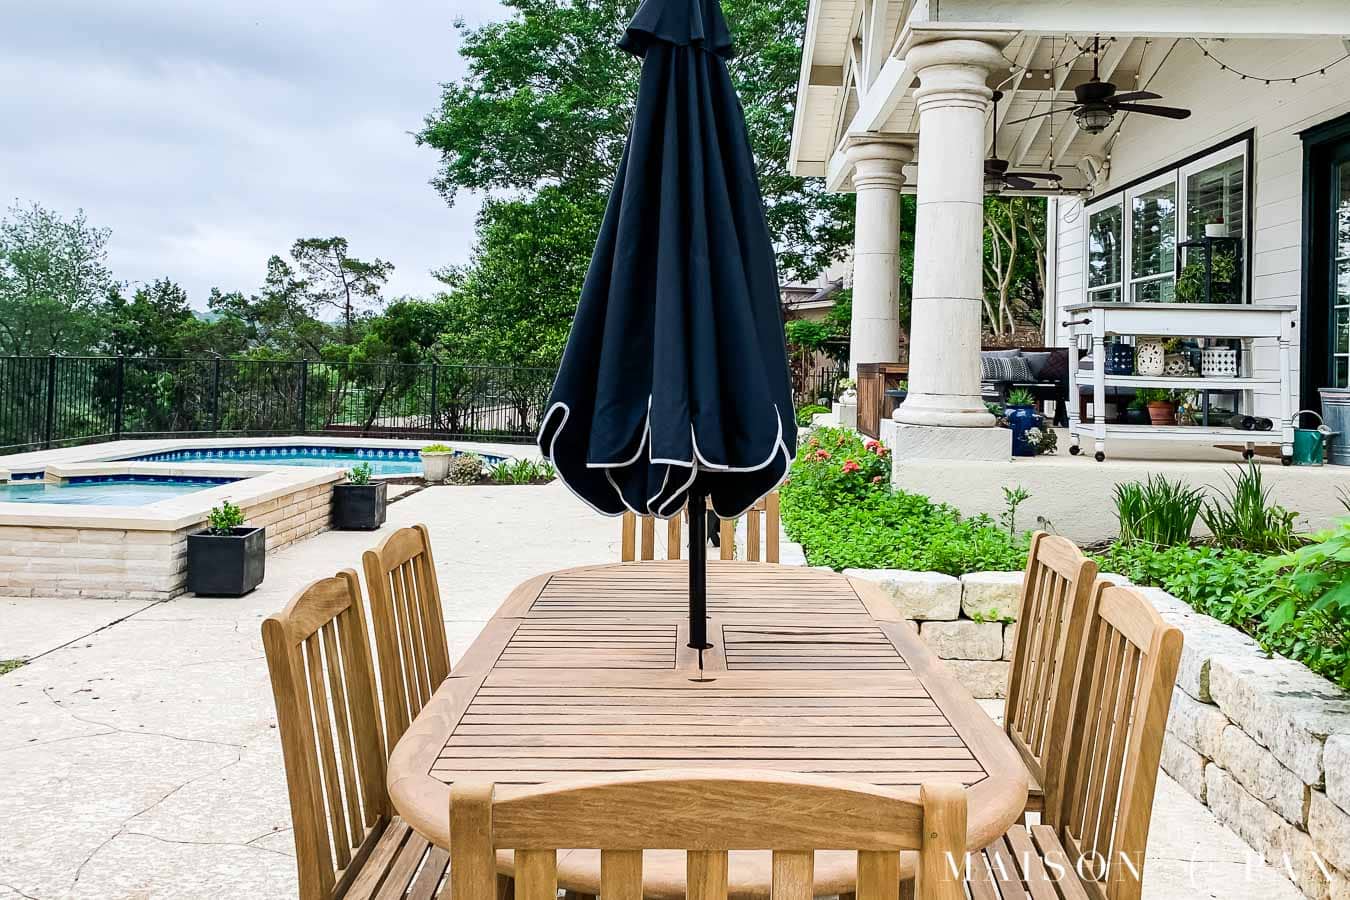 teak outdoor dining set with black umbrella